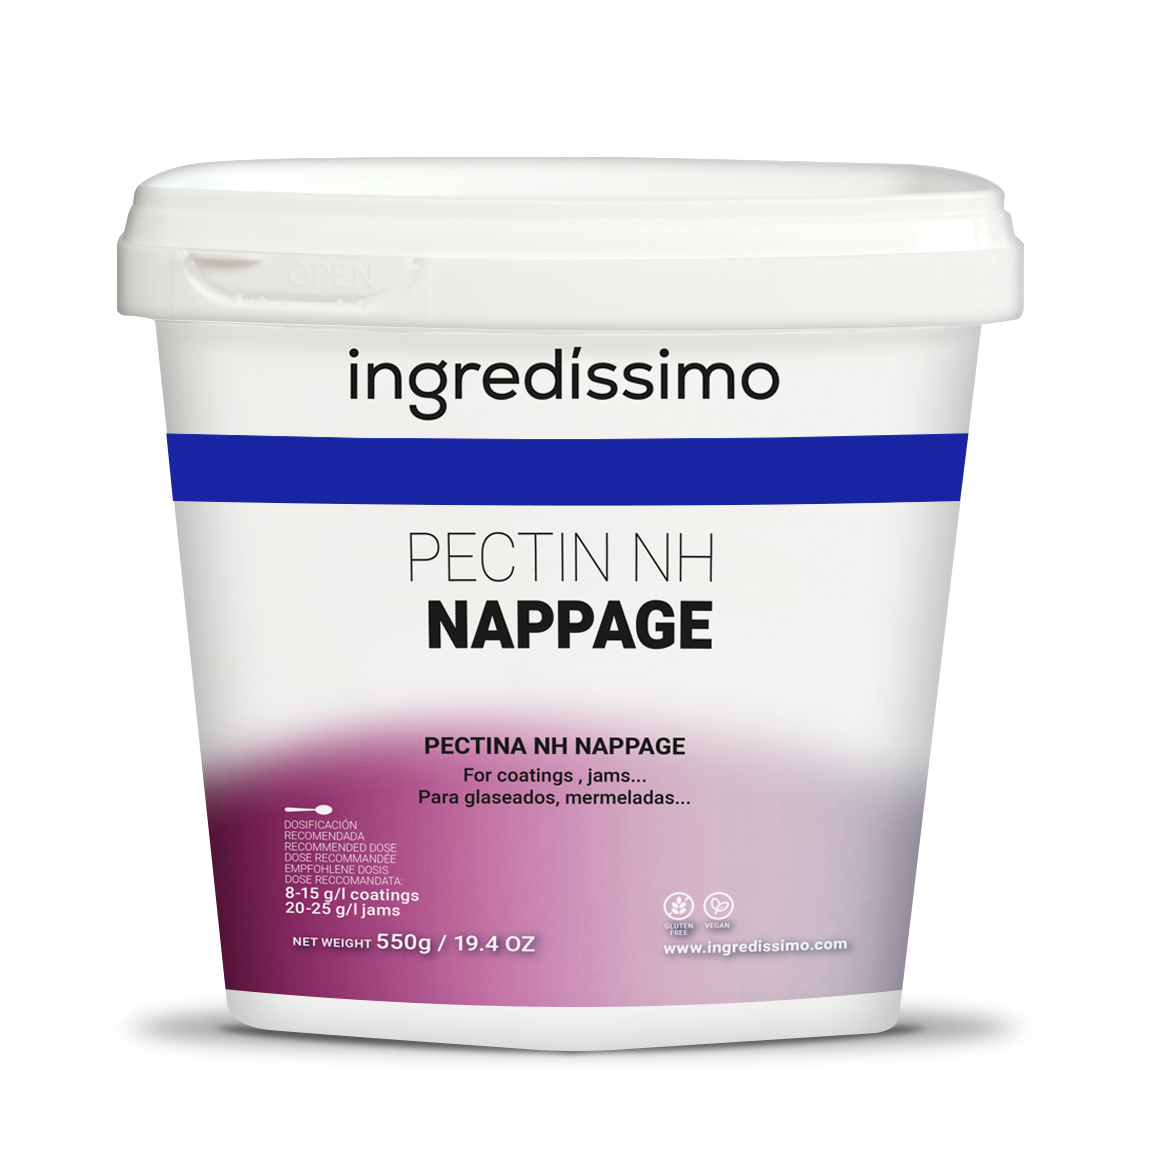 Pectine NH Nappage - 150 g